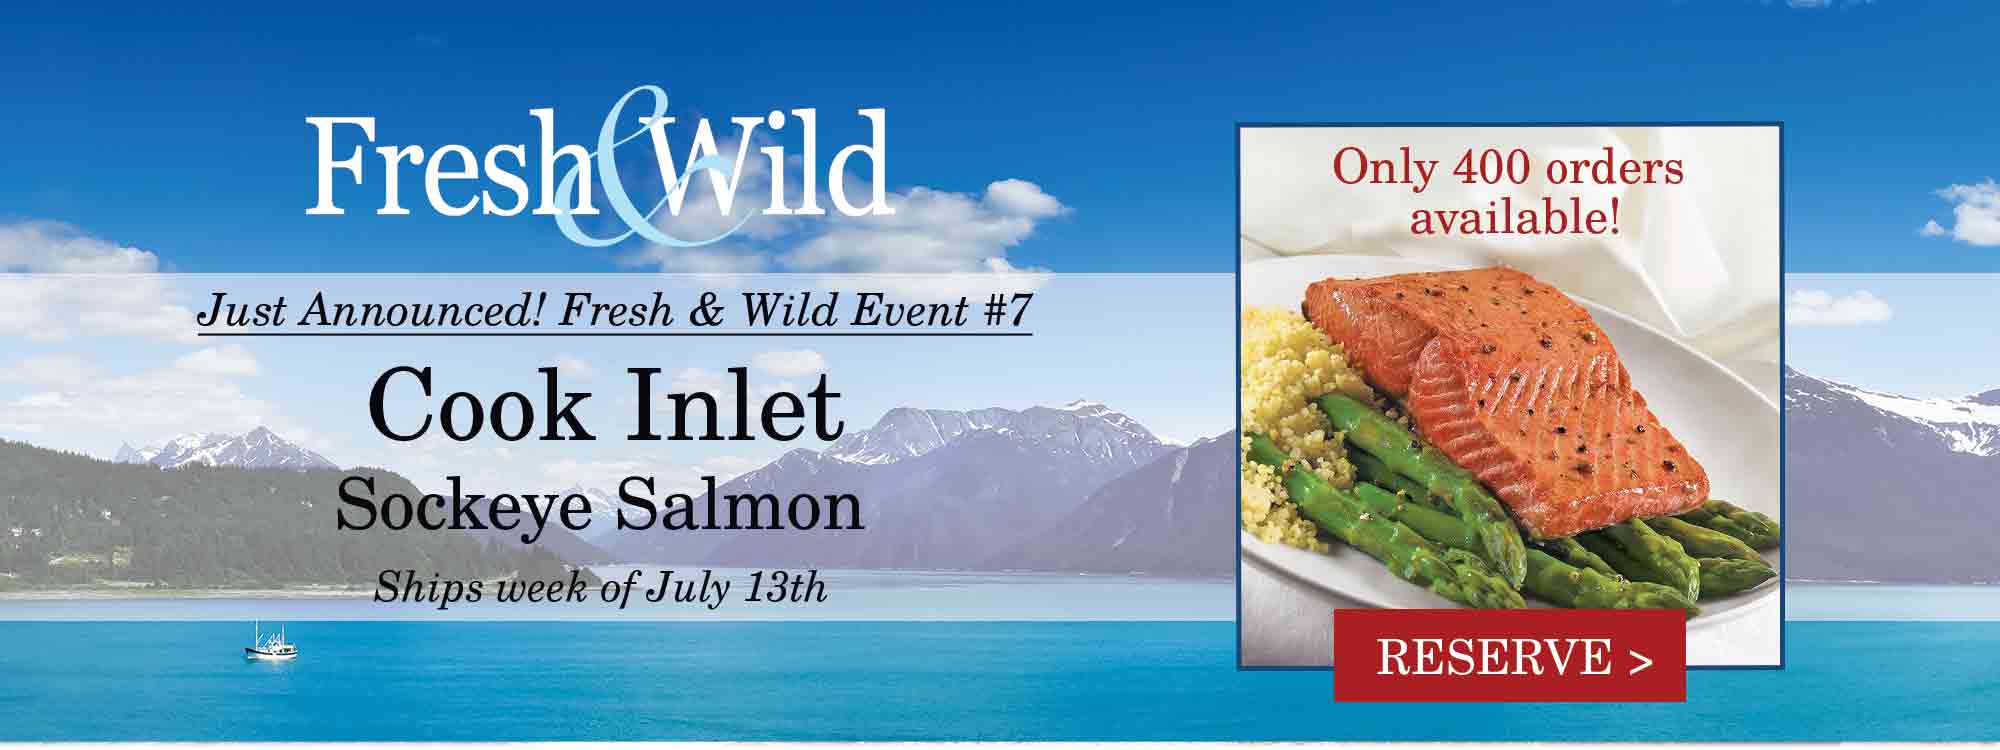 Fresh and Wild Cook Inlet Sockeye Salmon